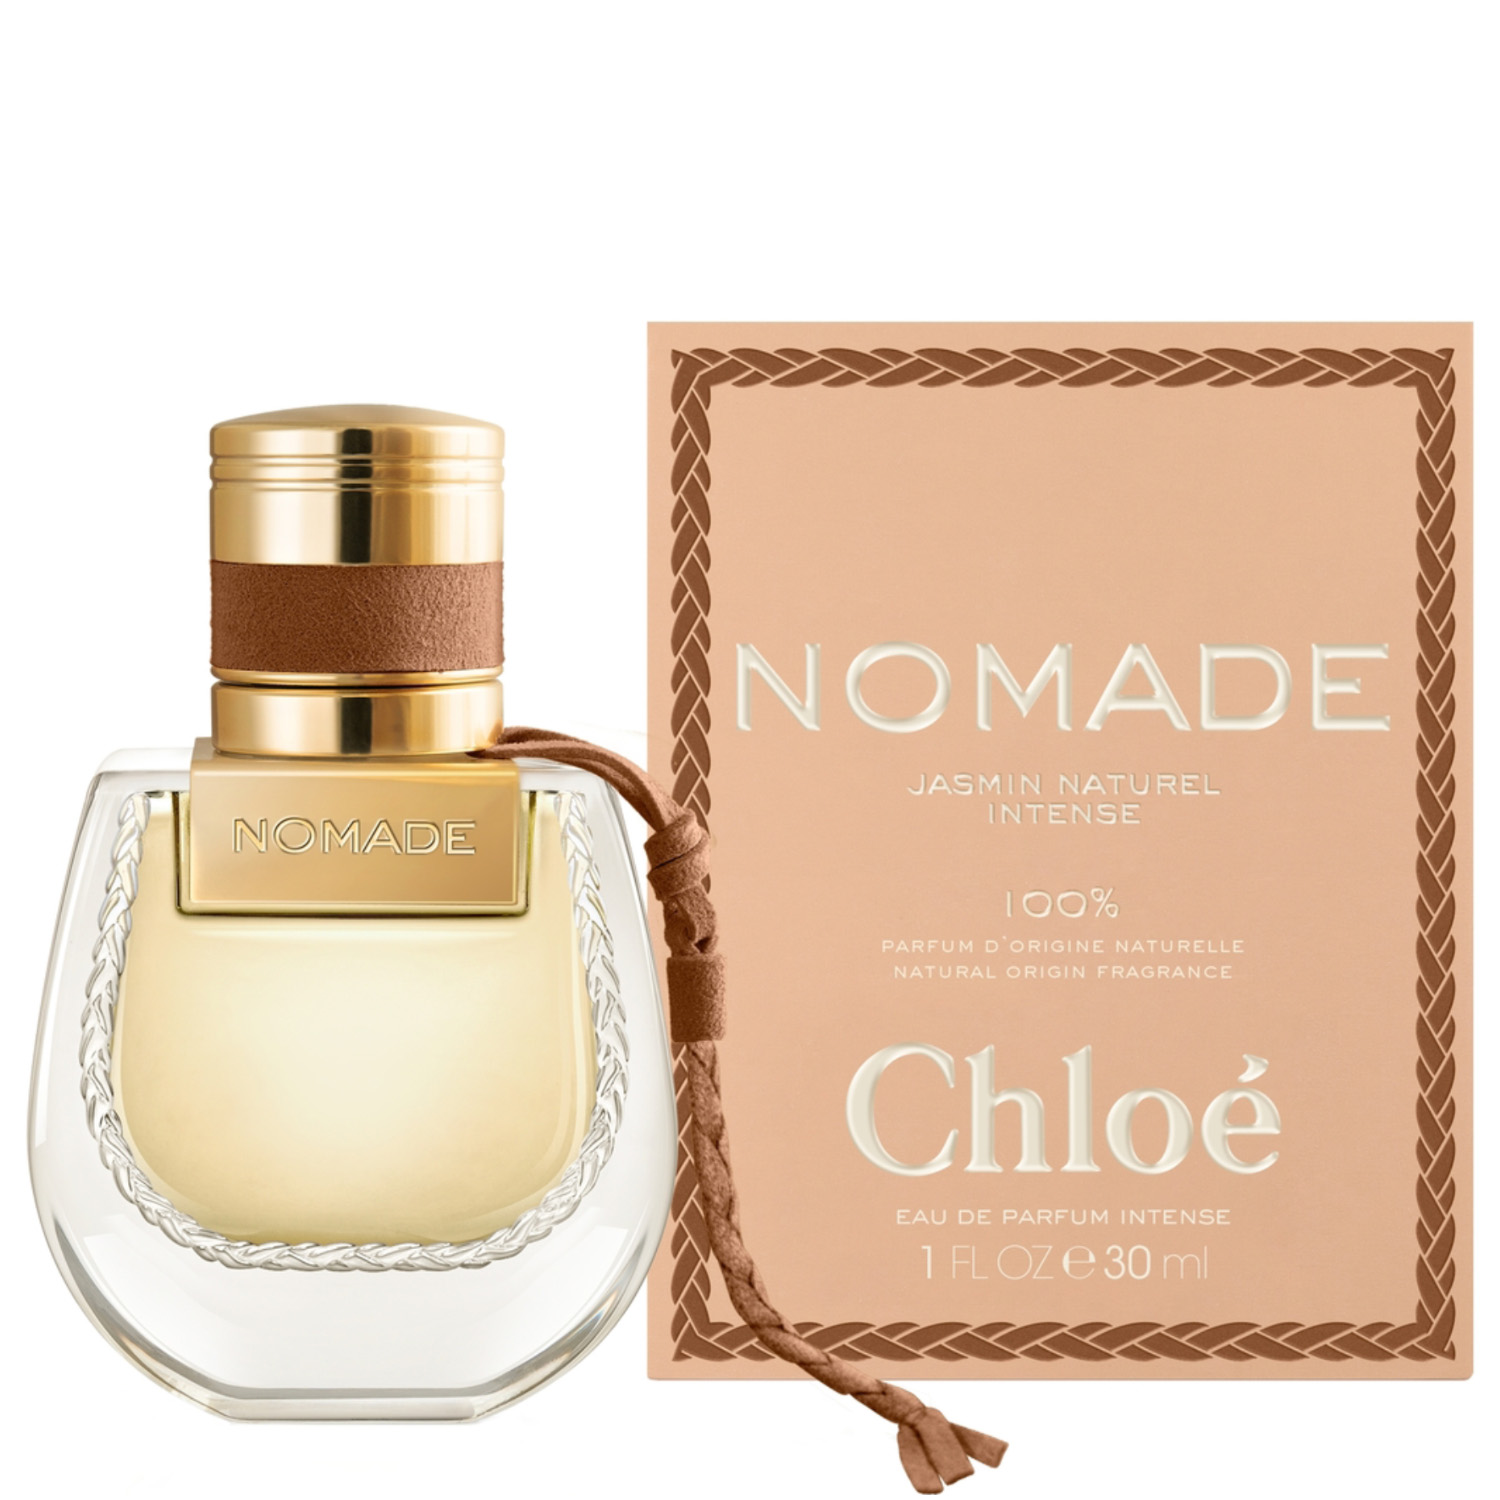 Chloé Nomade Jasmin Naturel Eau de Parfum Intense 30ml